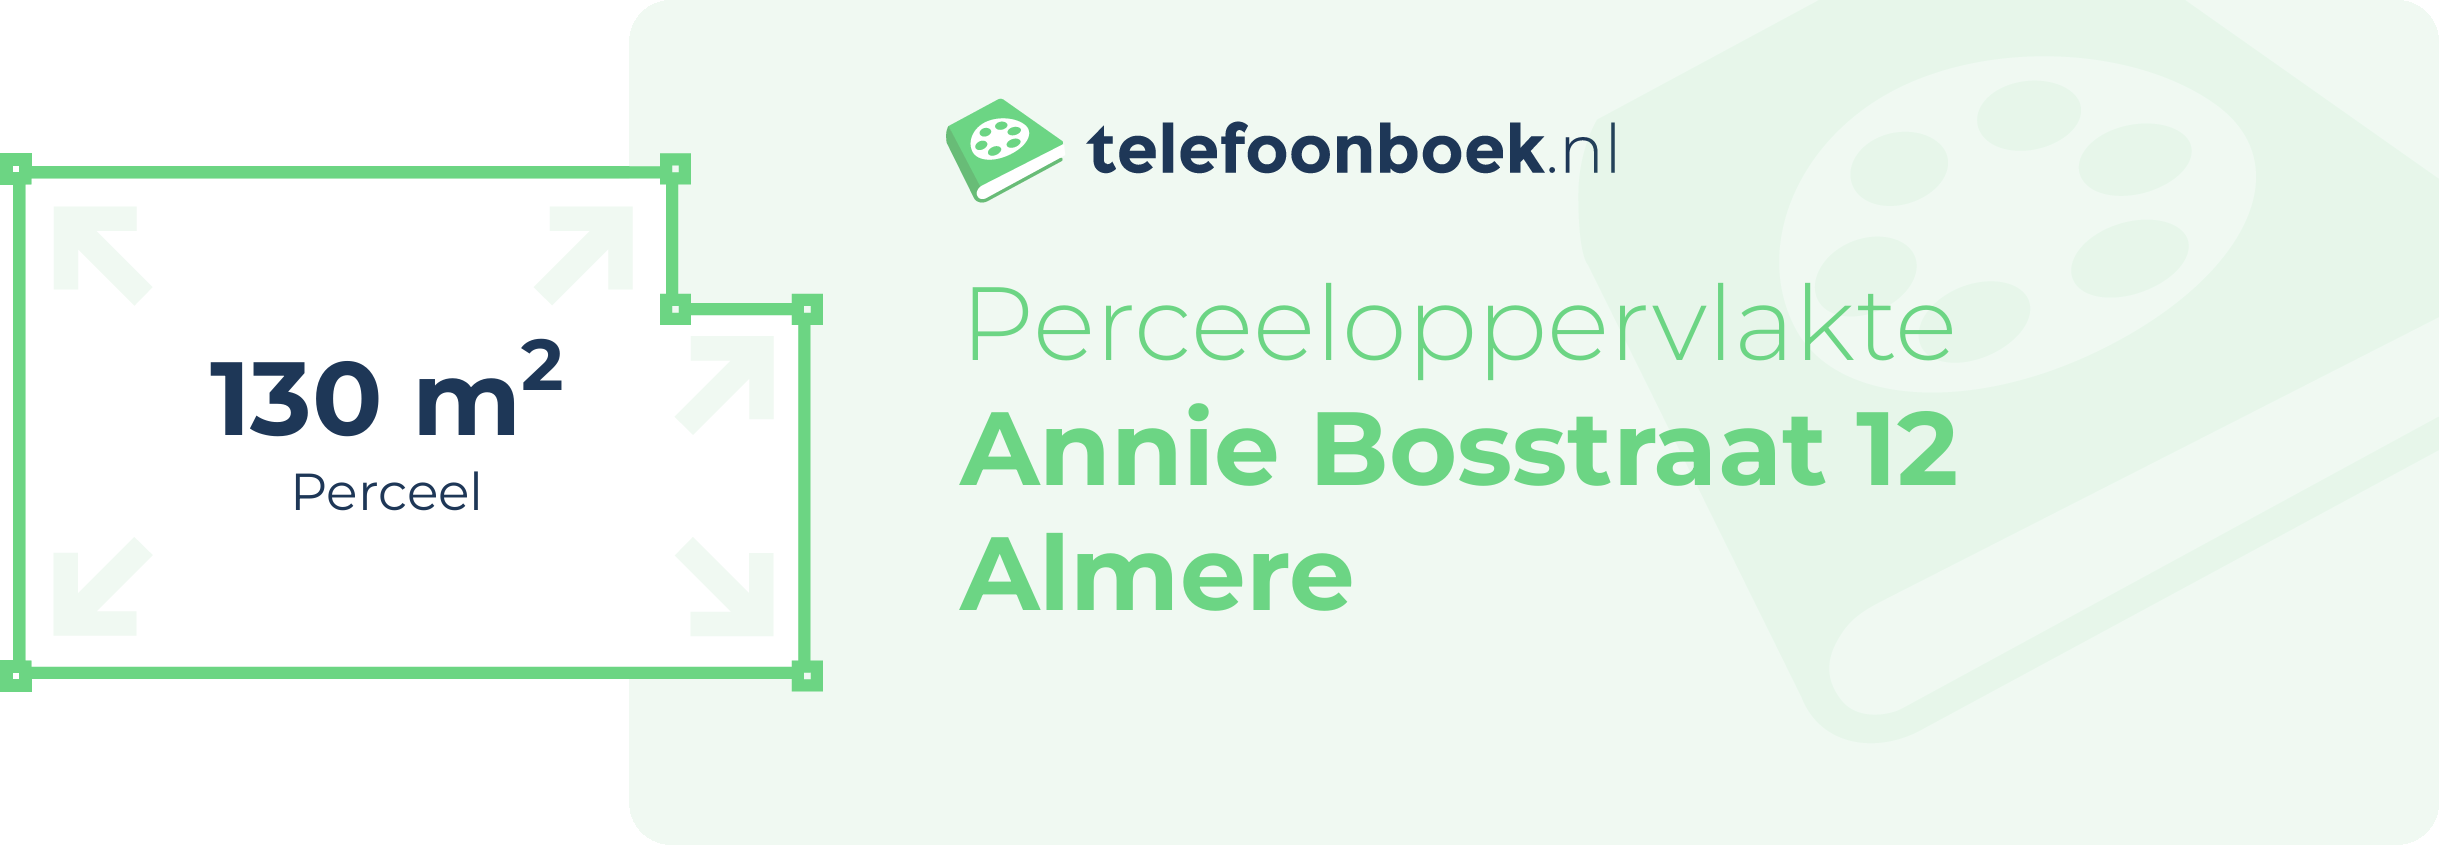 Perceeloppervlakte Annie Bosstraat 12 Almere